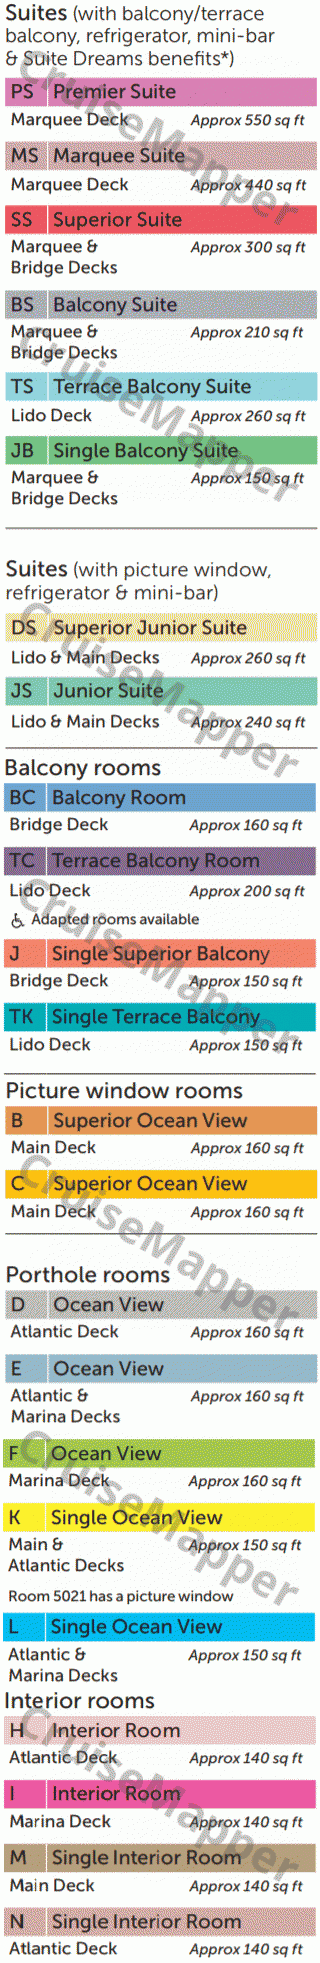 Black Watch deck 3 plan (Marina) legend